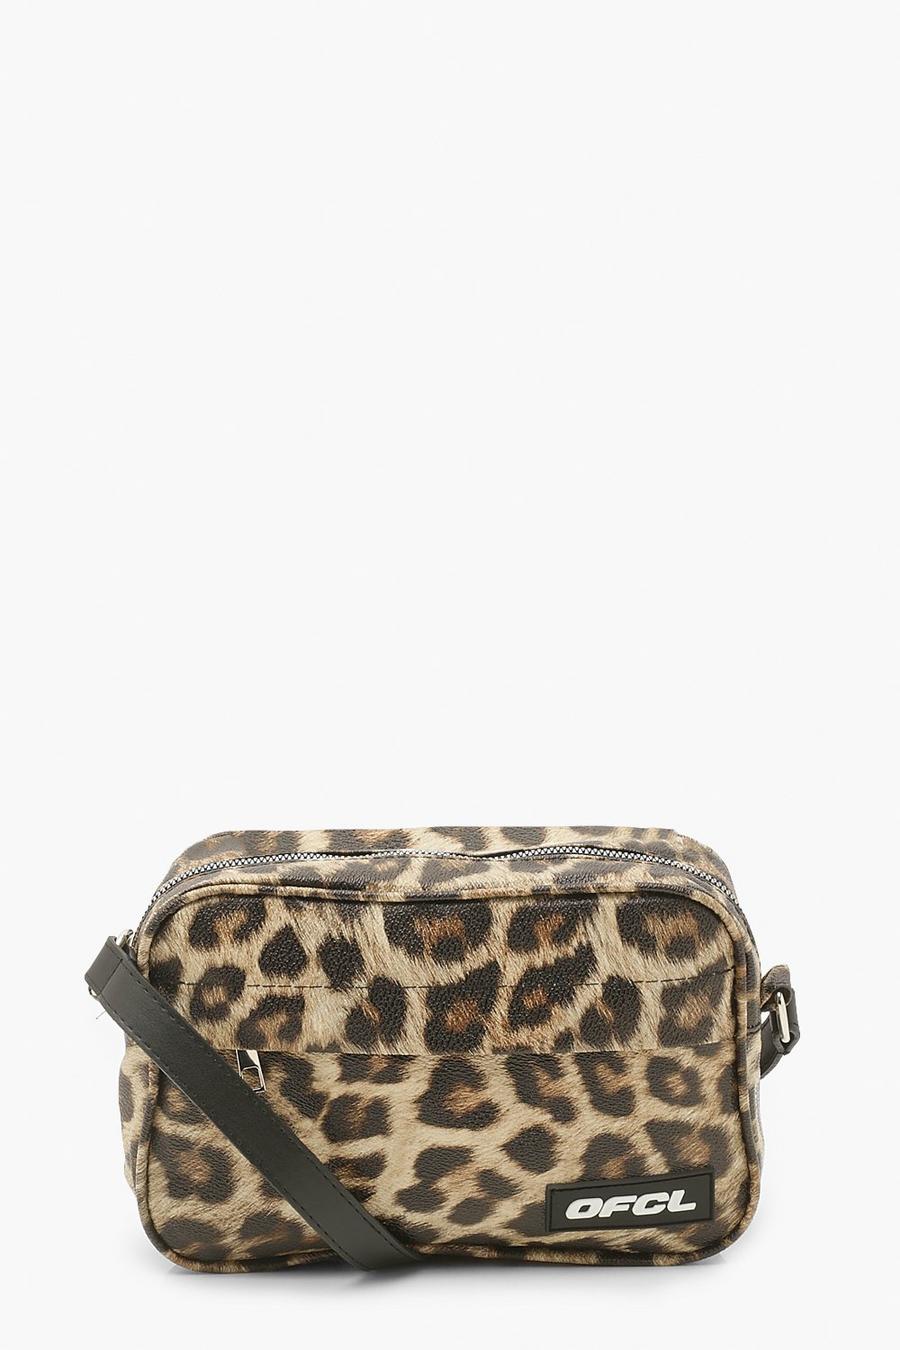 Ofcl Leopard Print Cross Body Bag